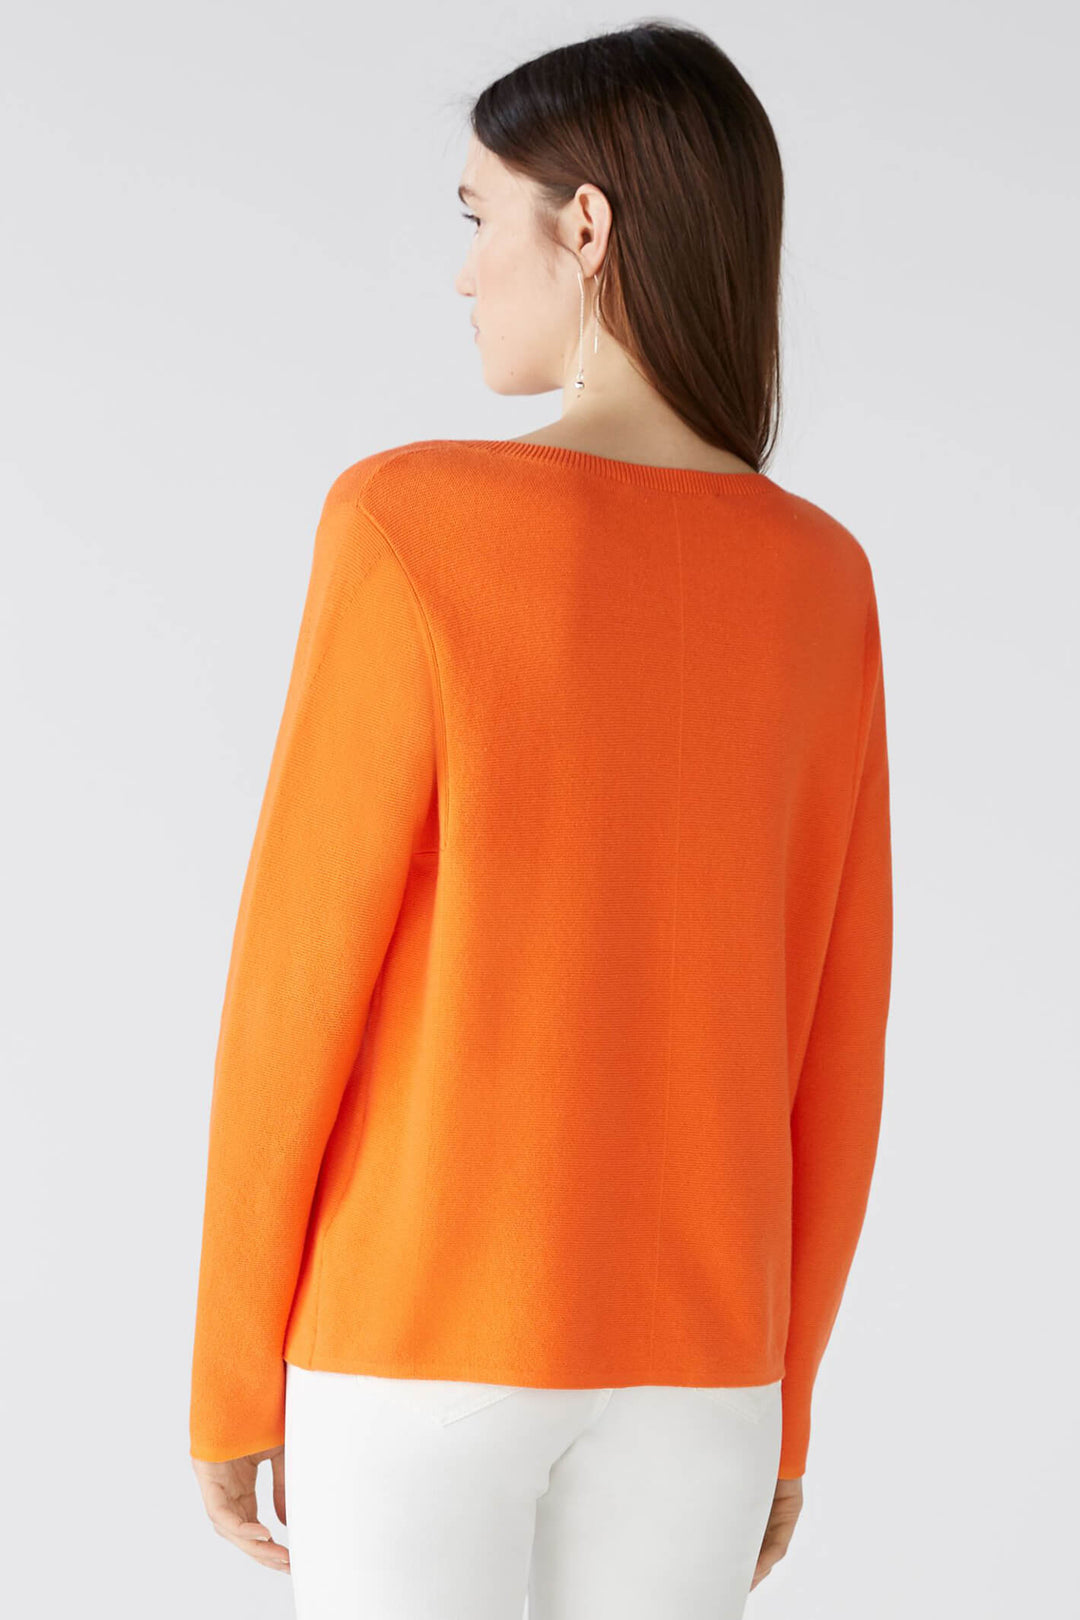 Oui 78919 Vermillion Orange Jumper - Olivia Grace Fashion